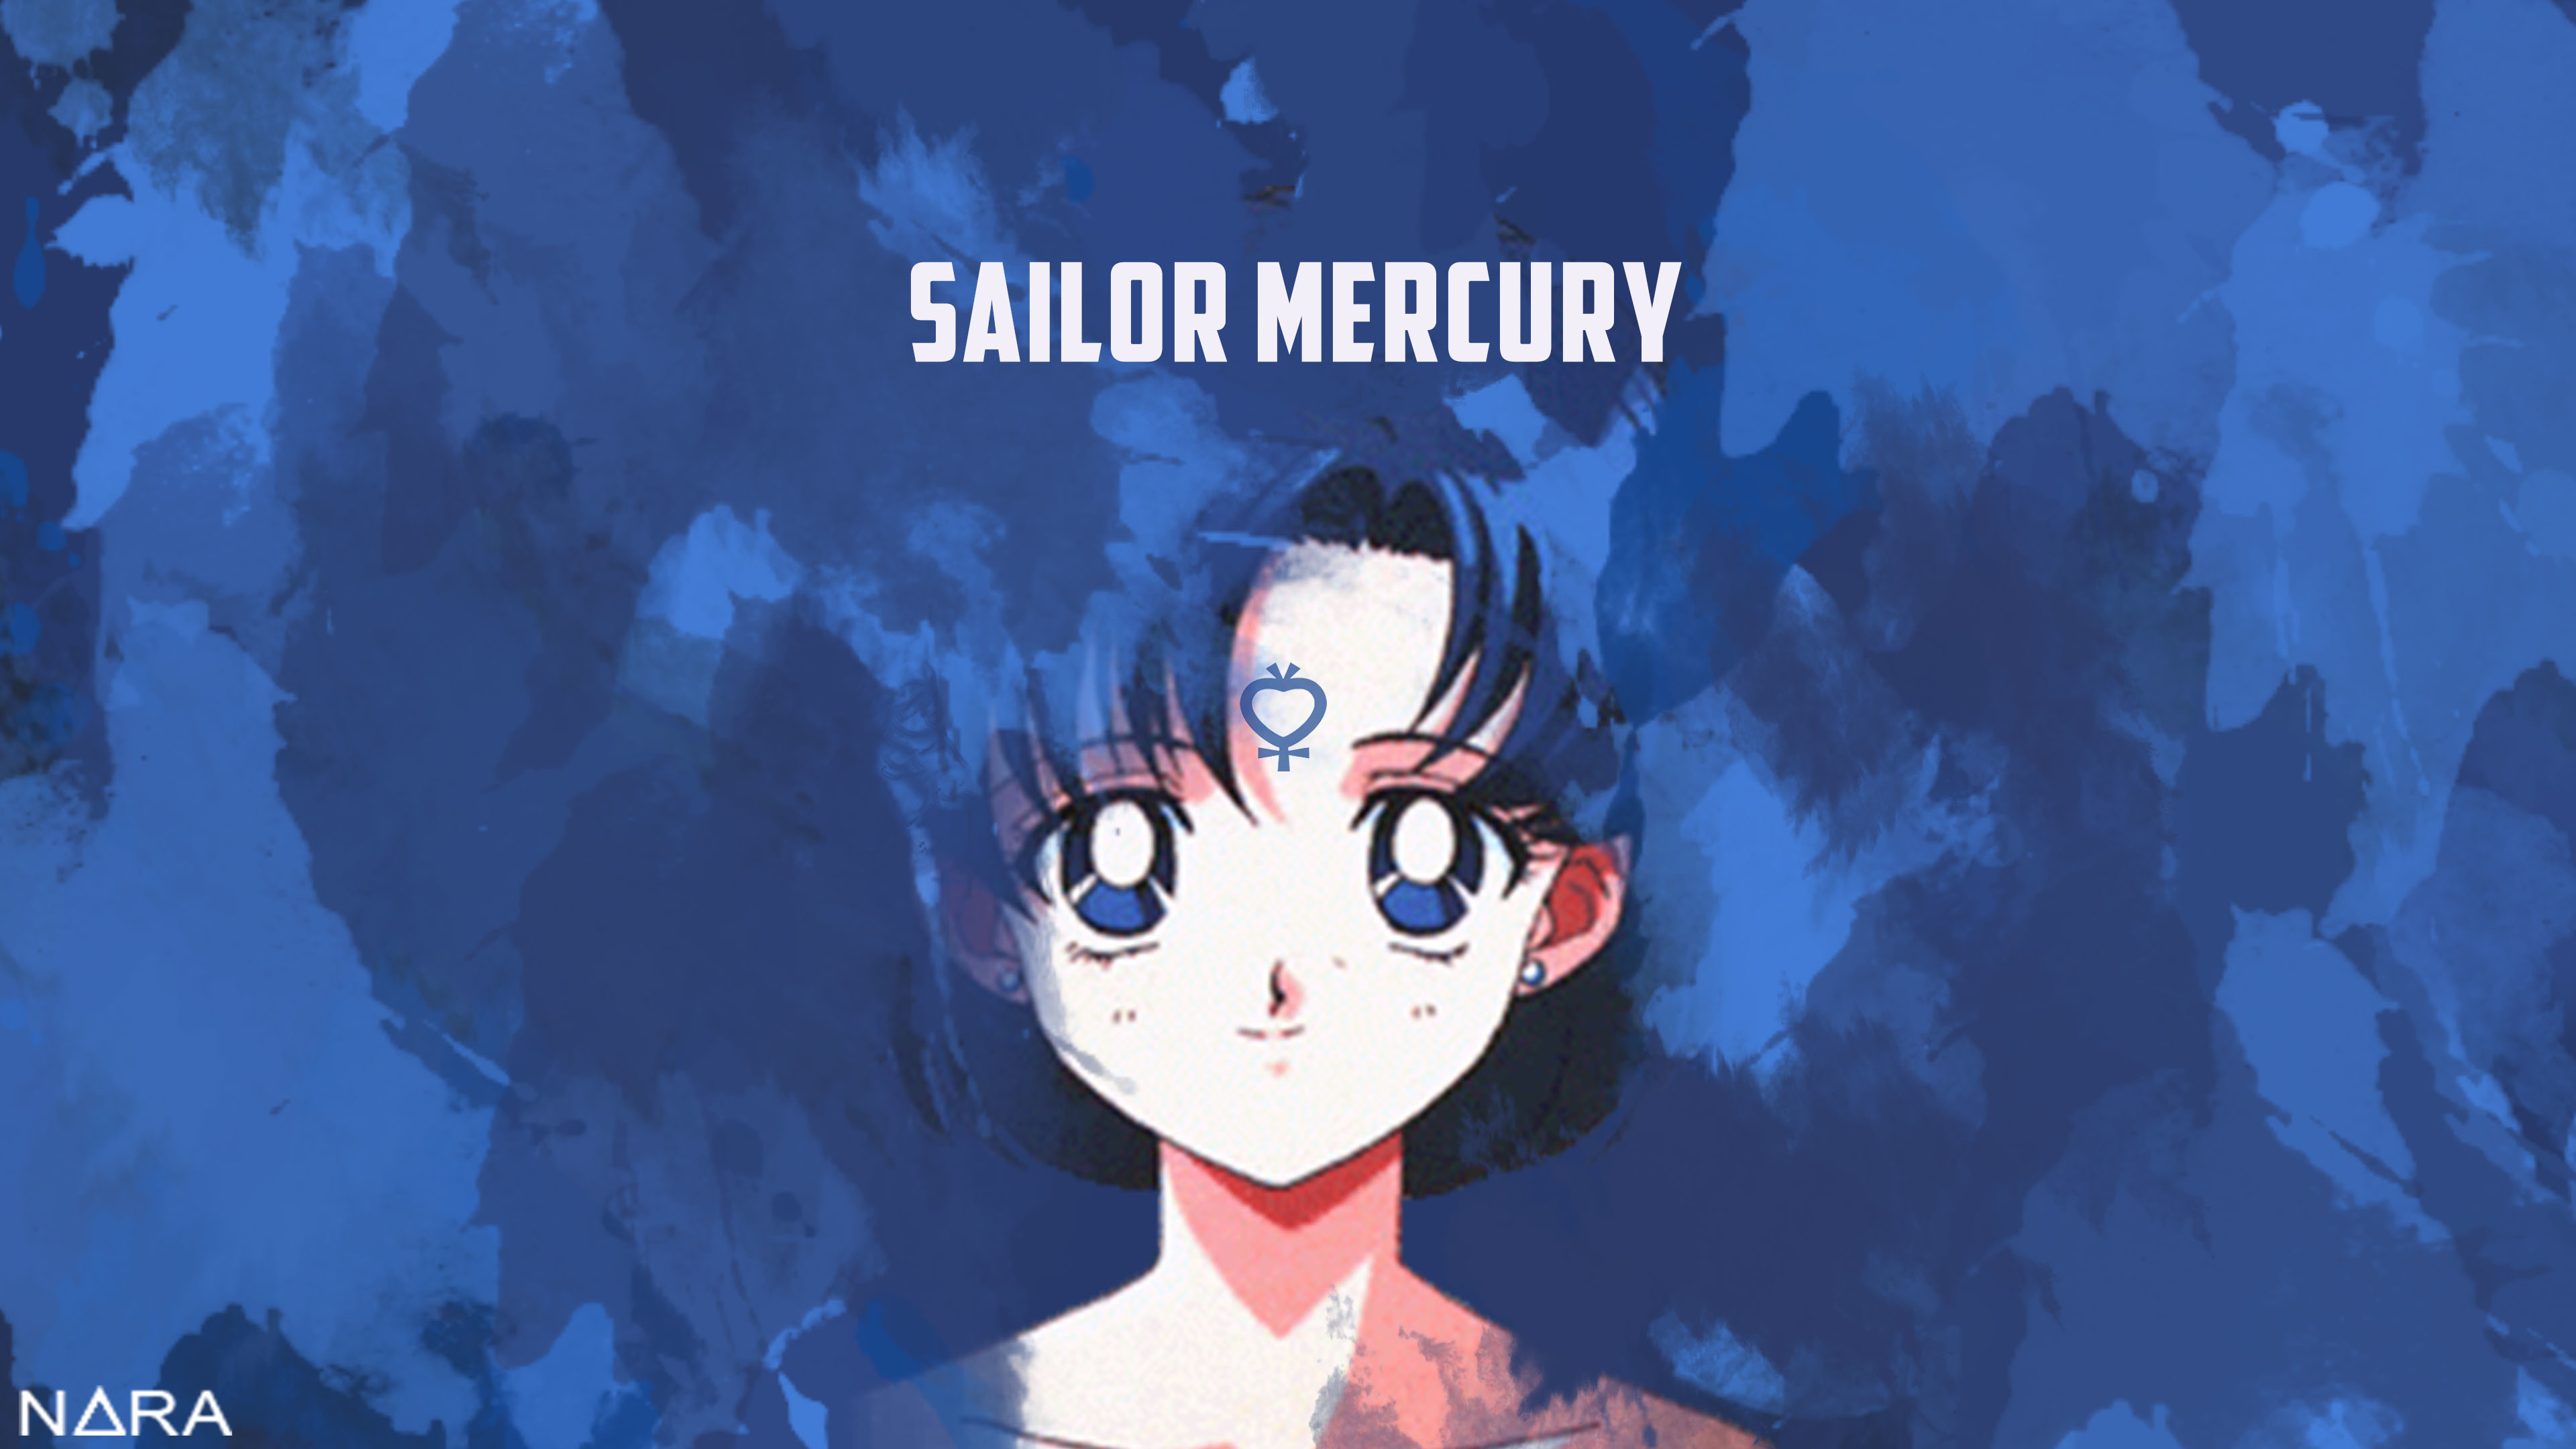 3840x2160 Sailor Mercury - Wallpaper by NoraOrihara Sailor Mercury - Wallpaper by  NoraOrihara